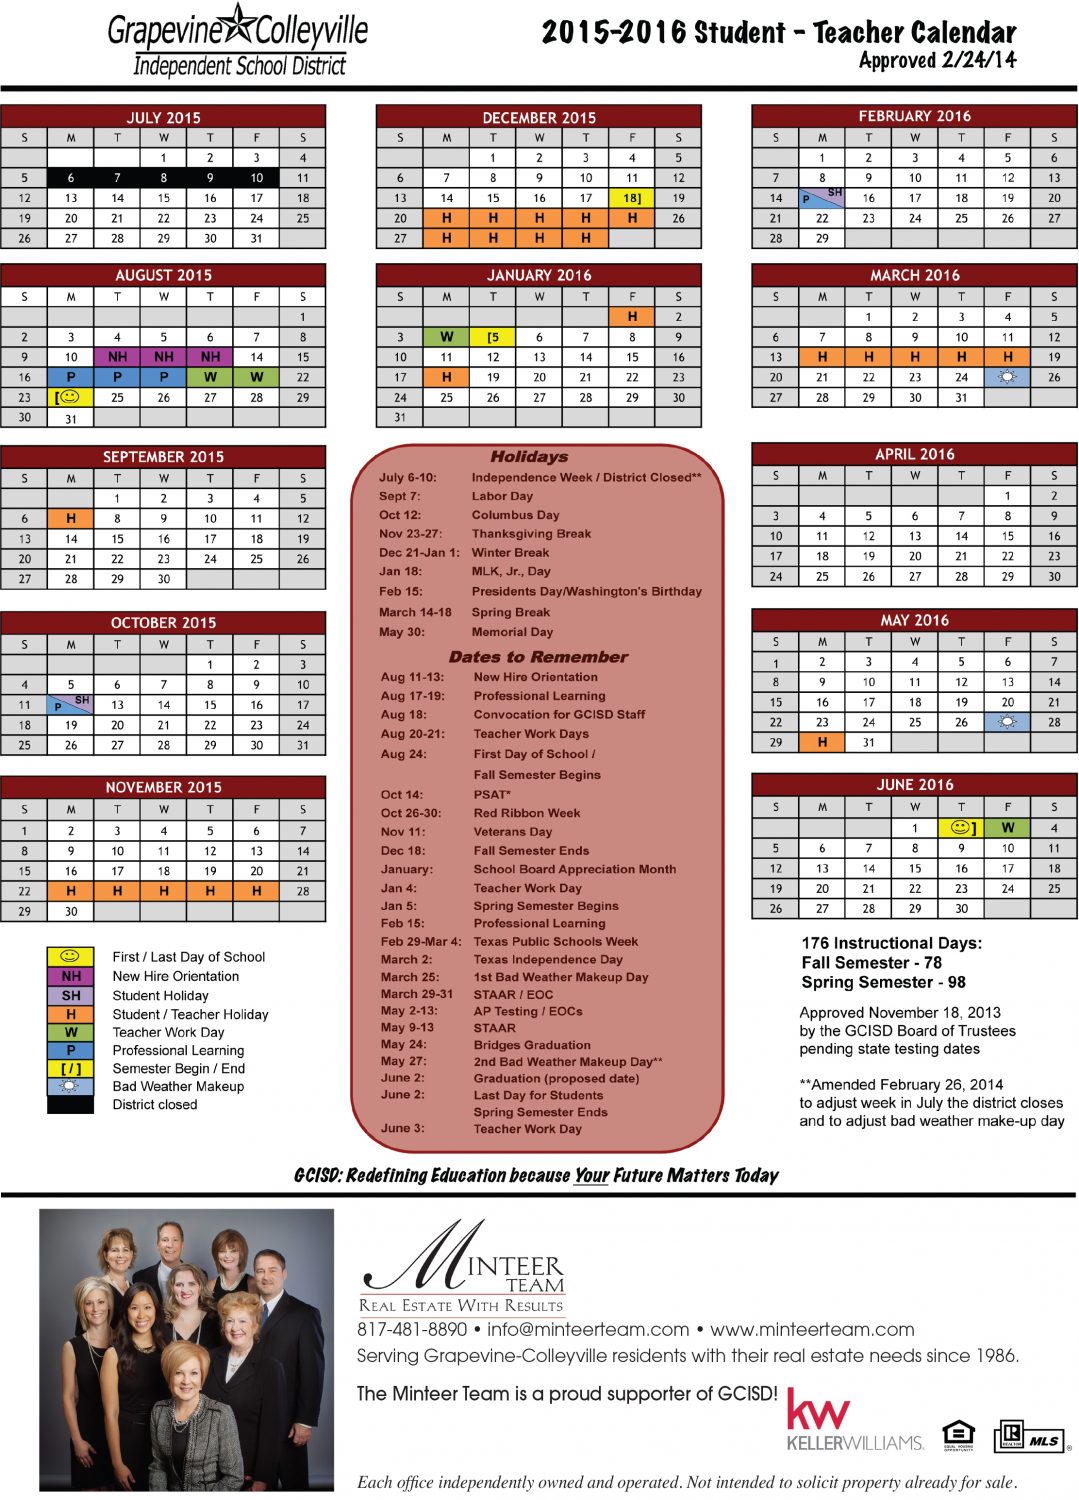 School Calendar for GCISD (2015 2016) Minteer Real Estate Team